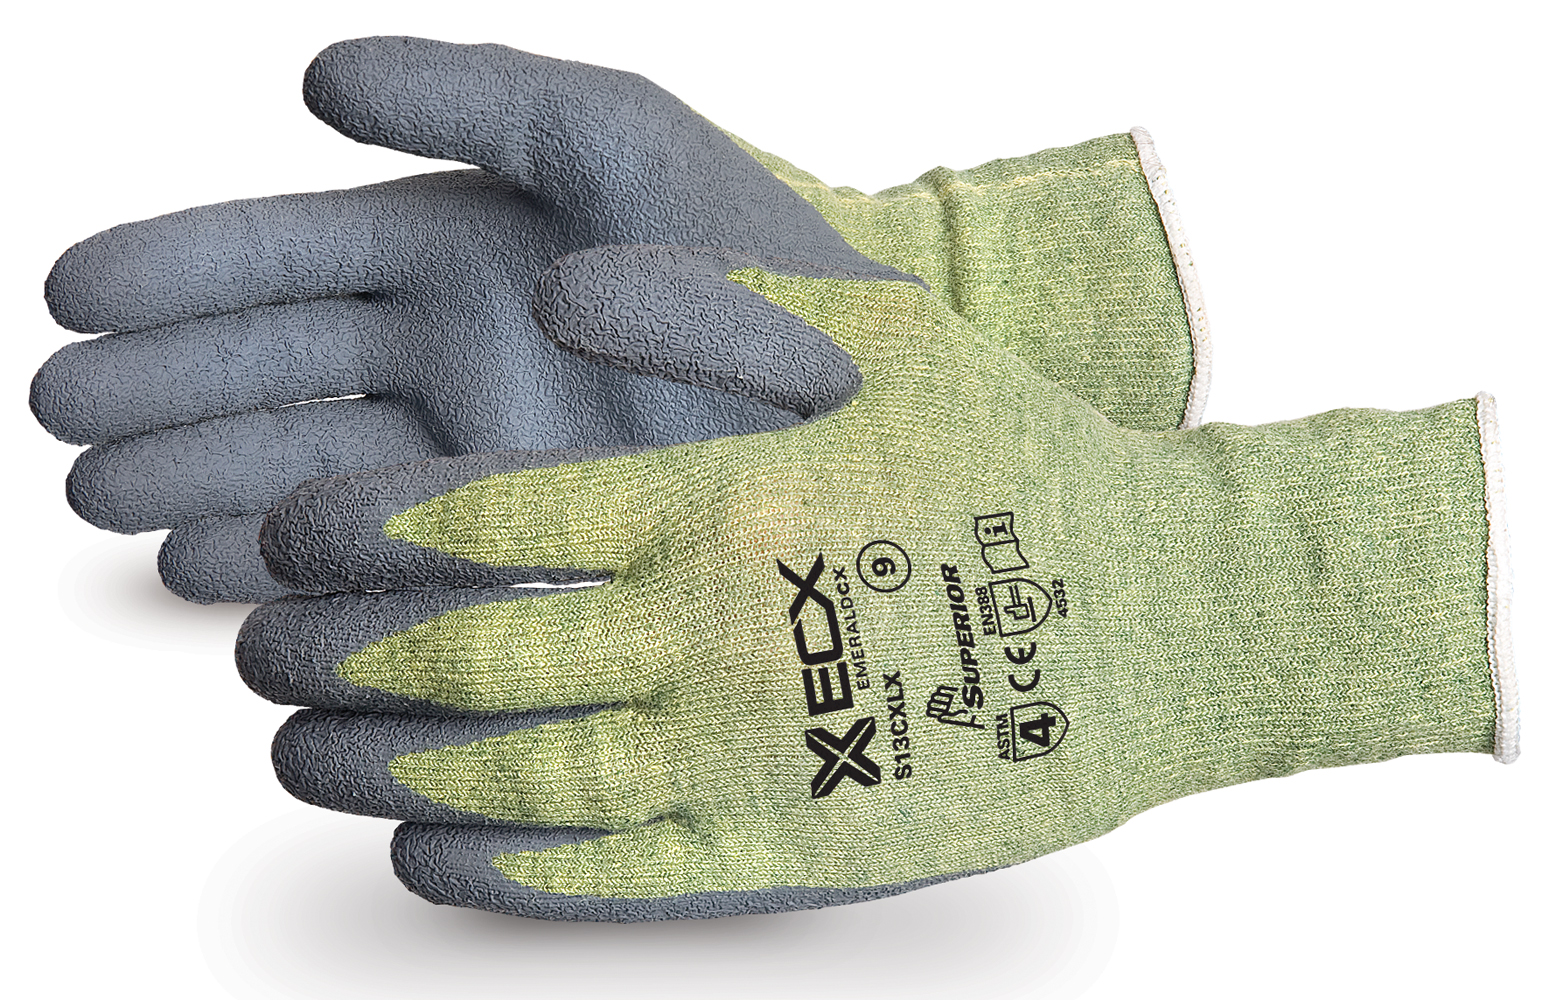 Superiorglove SUS13CXLX Emerald CX Kevlar Wire Core Latex Palm Cut Resistant Level 5 Glove-0